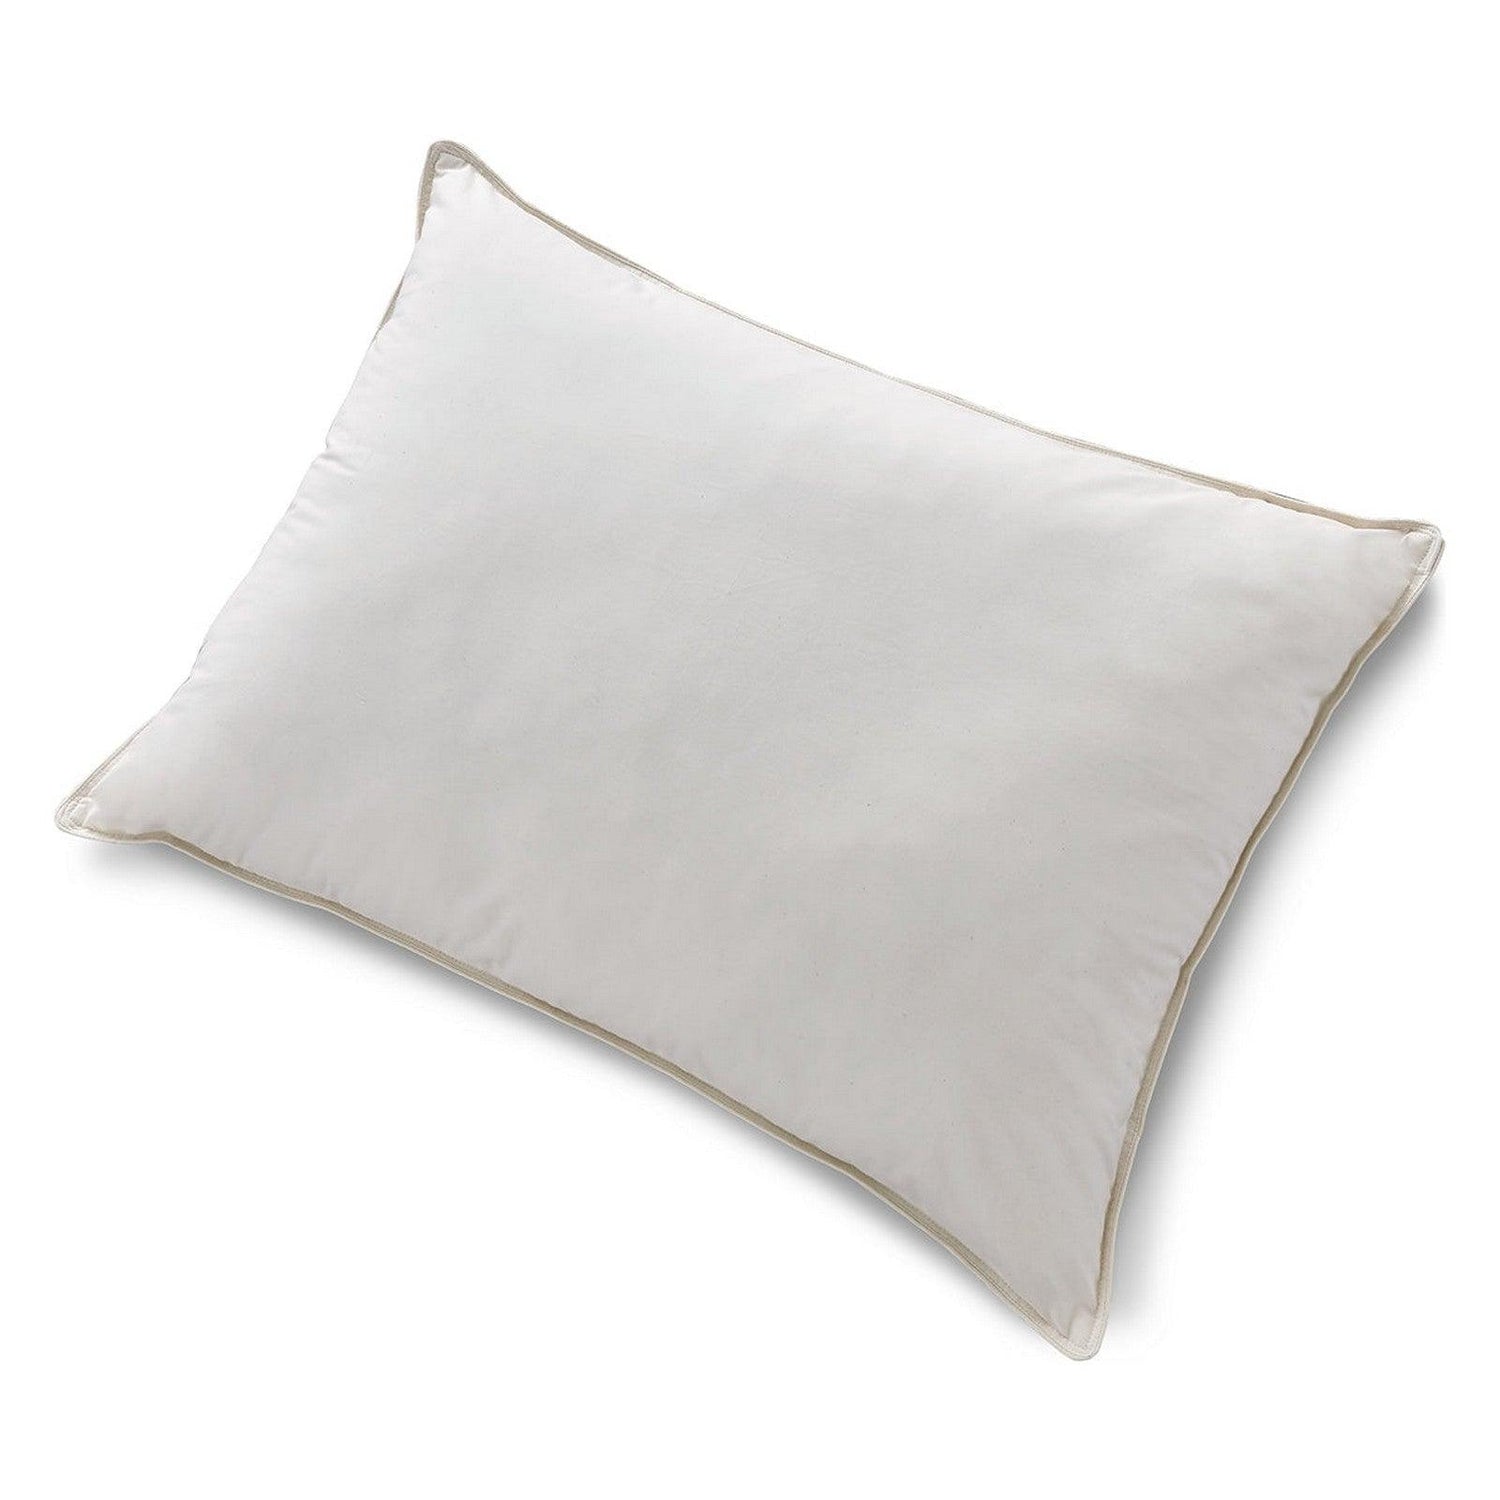 Z123 Pillow Series Cotton Allergy Pillow Ash-M82411P